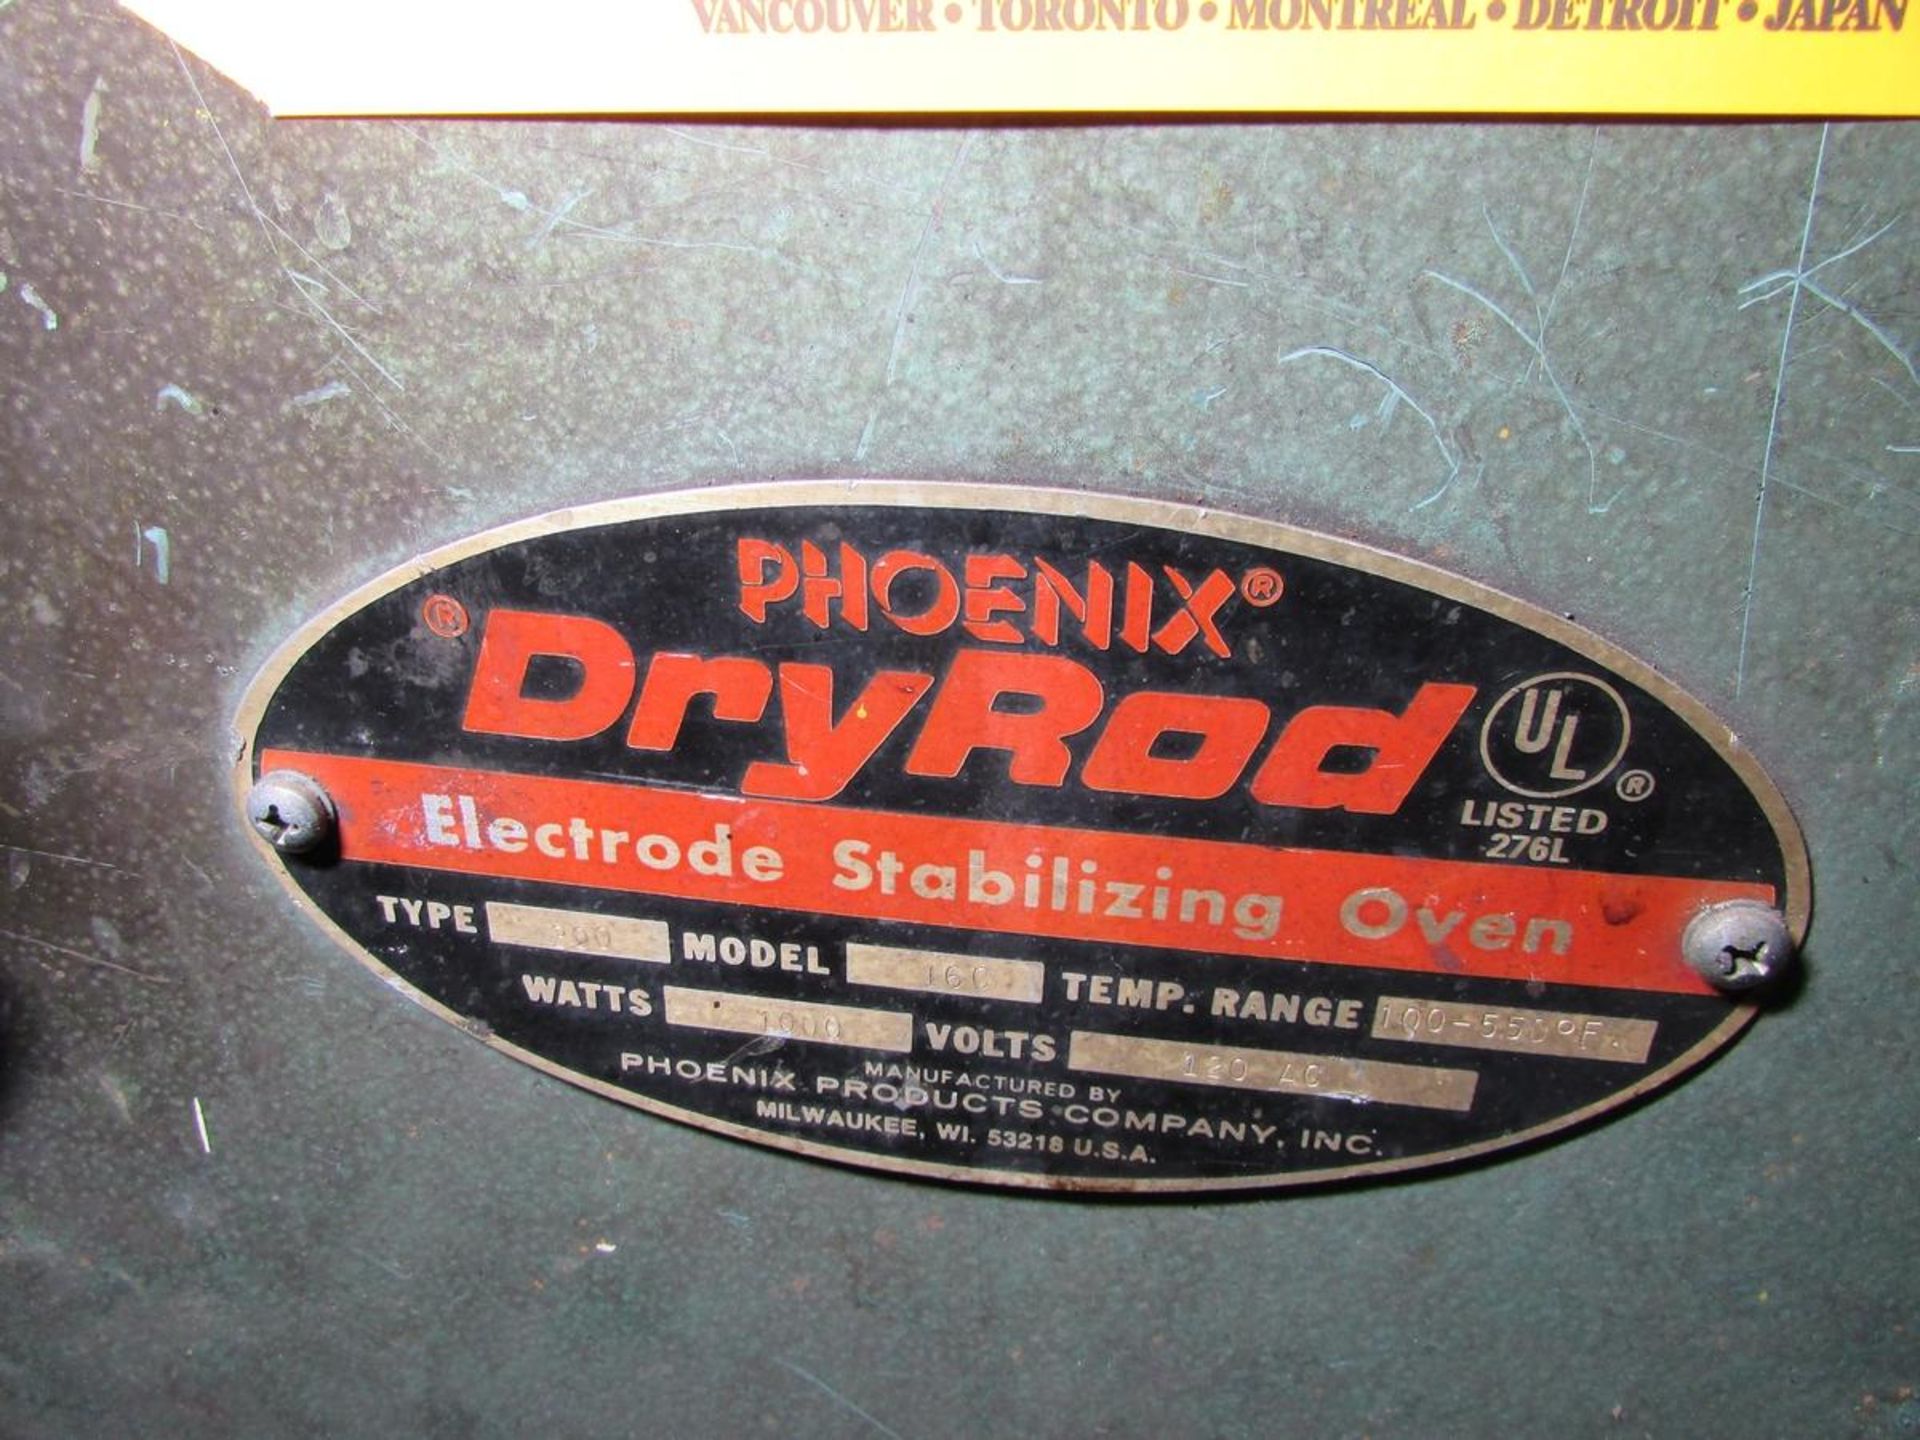 Phoenix DryRod 16C Electrode Stabilizing Oven - Image 3 of 4